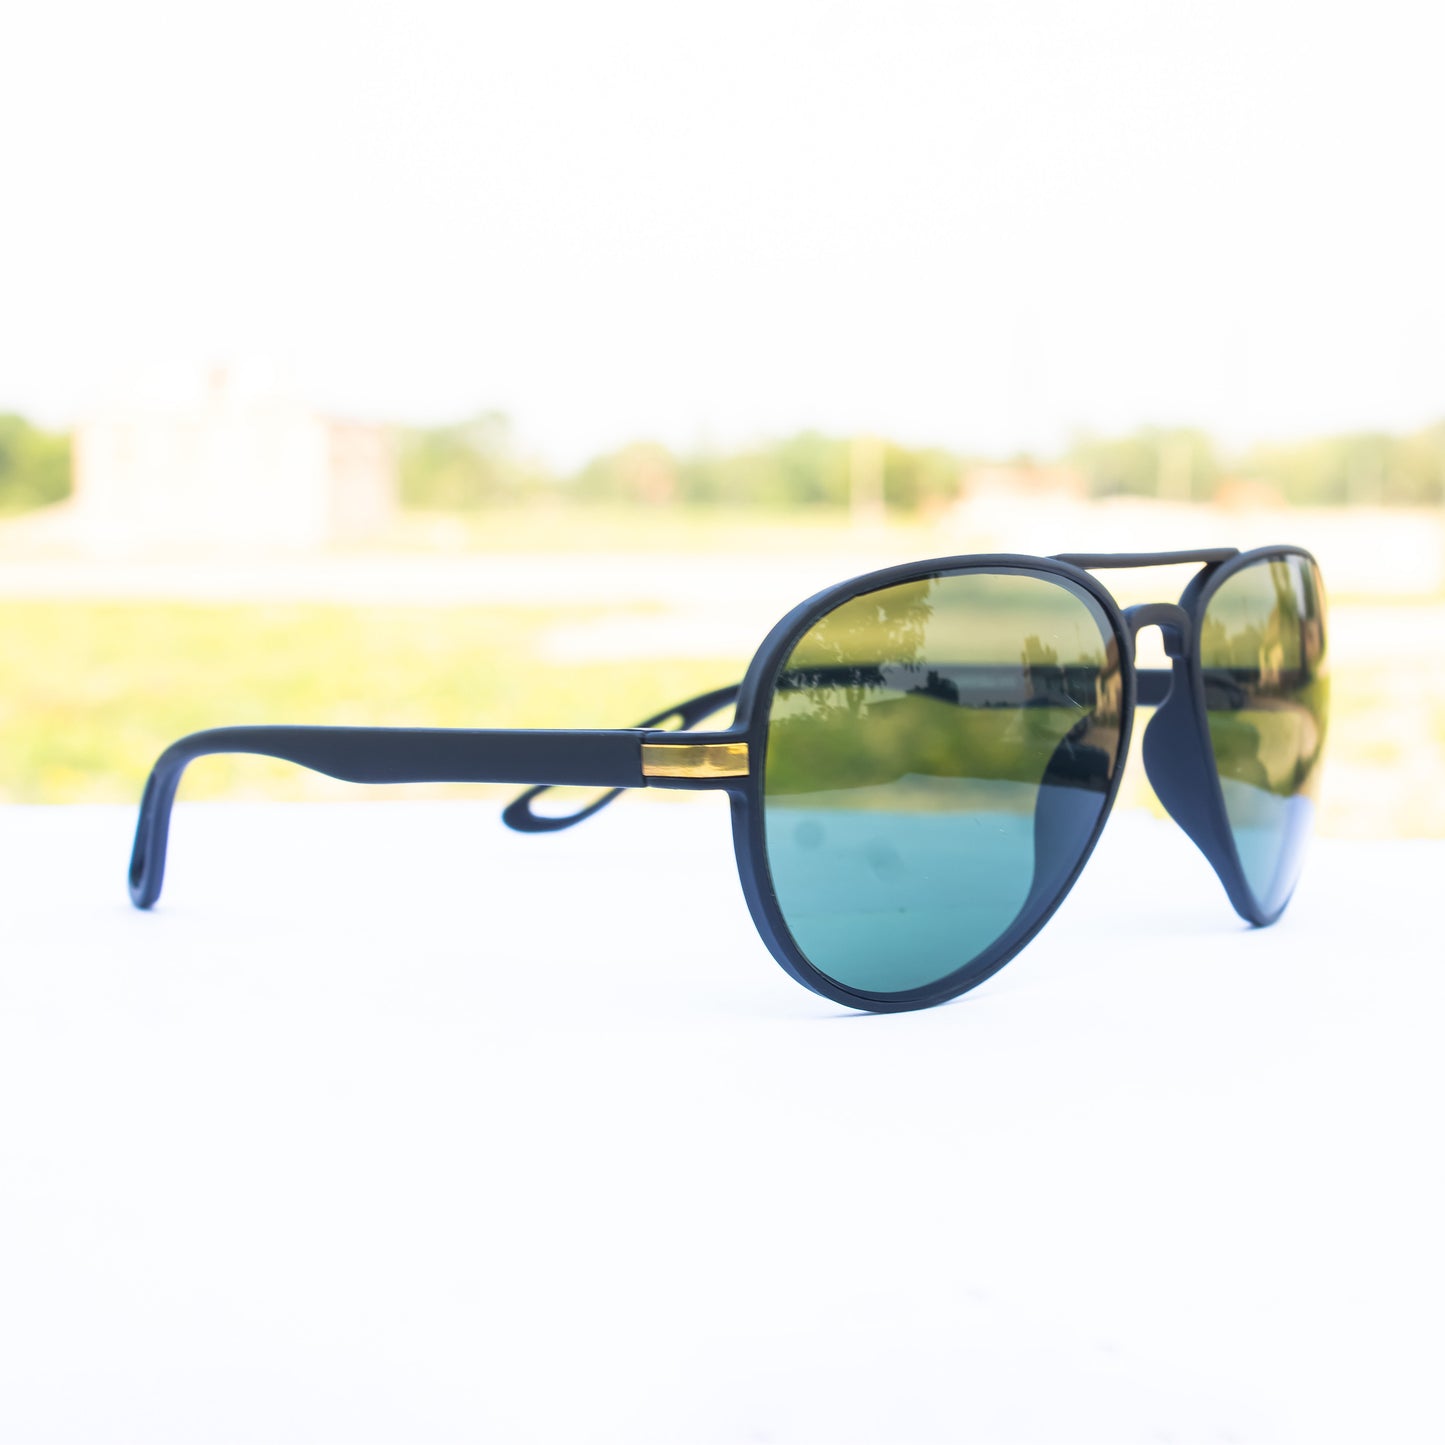 Jiebo UV Protection Aviator Sunglasses For Men, Green